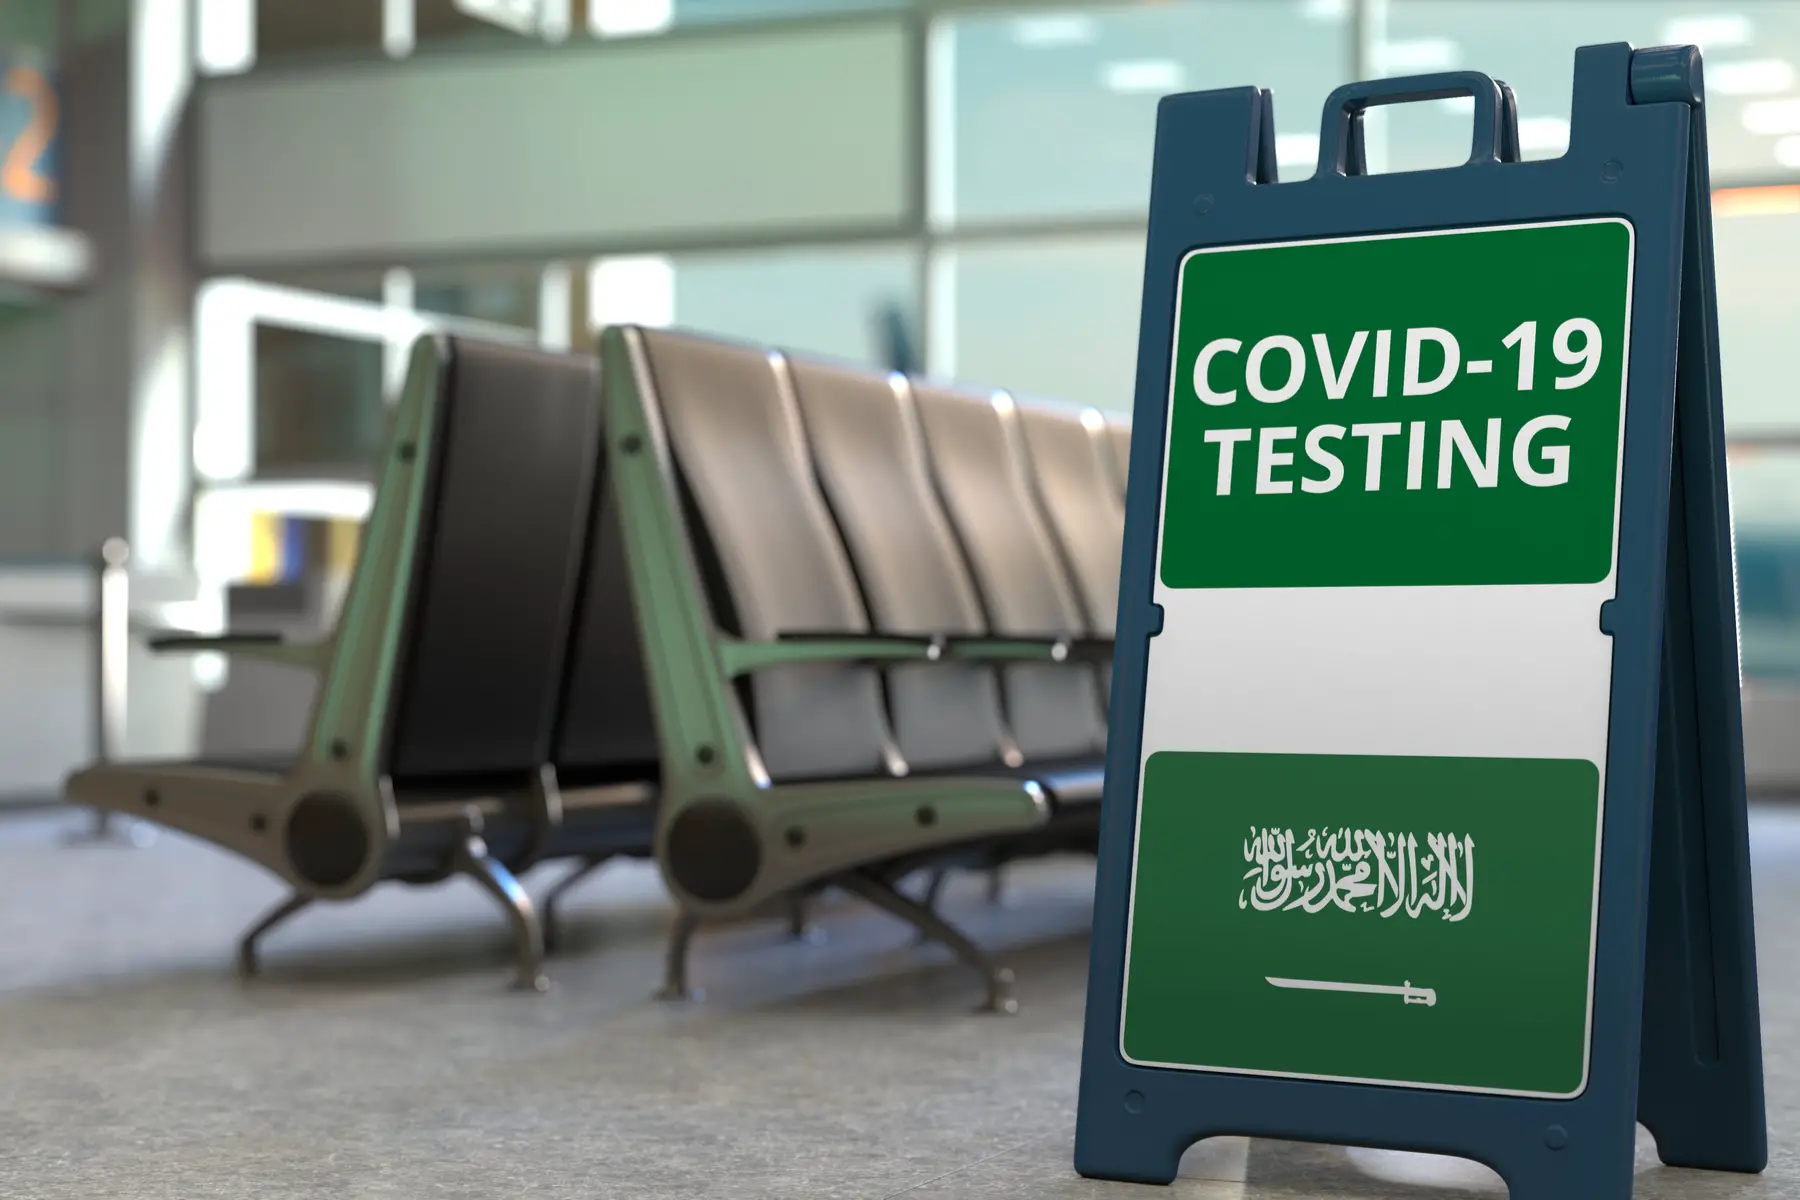 a COVID-19 testing sign in an airport in Saudi Arabia